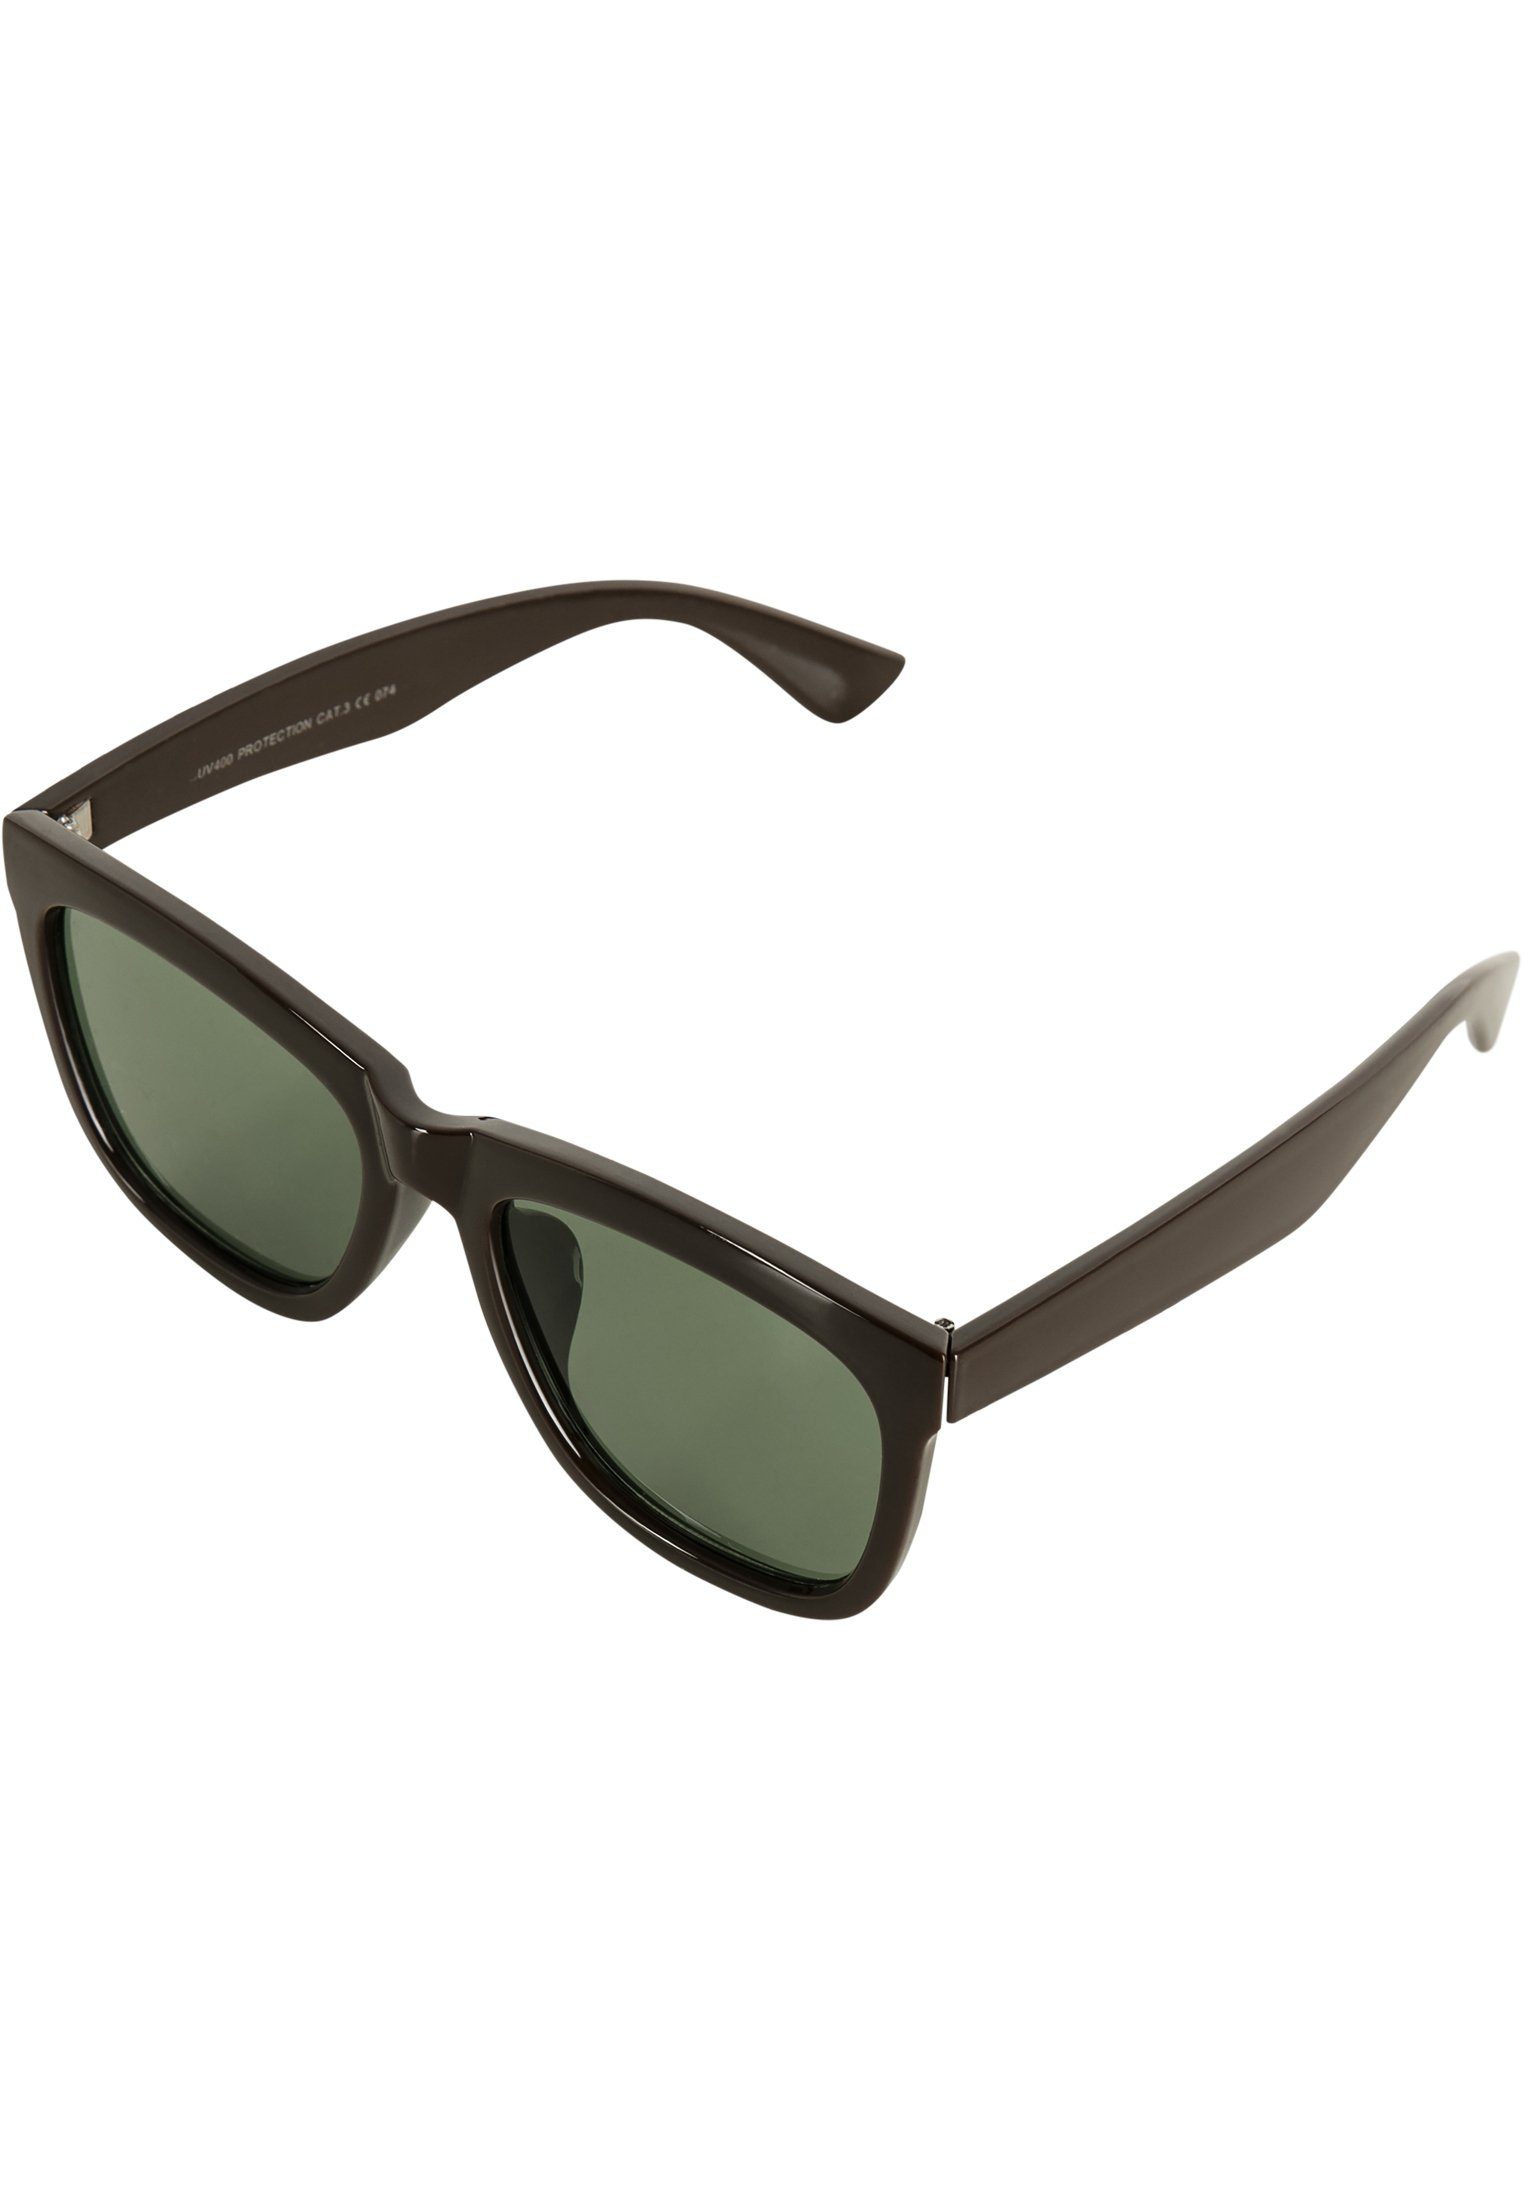 Accessoires MSTRDS September Sonnenbrille brown/green Sunglasses